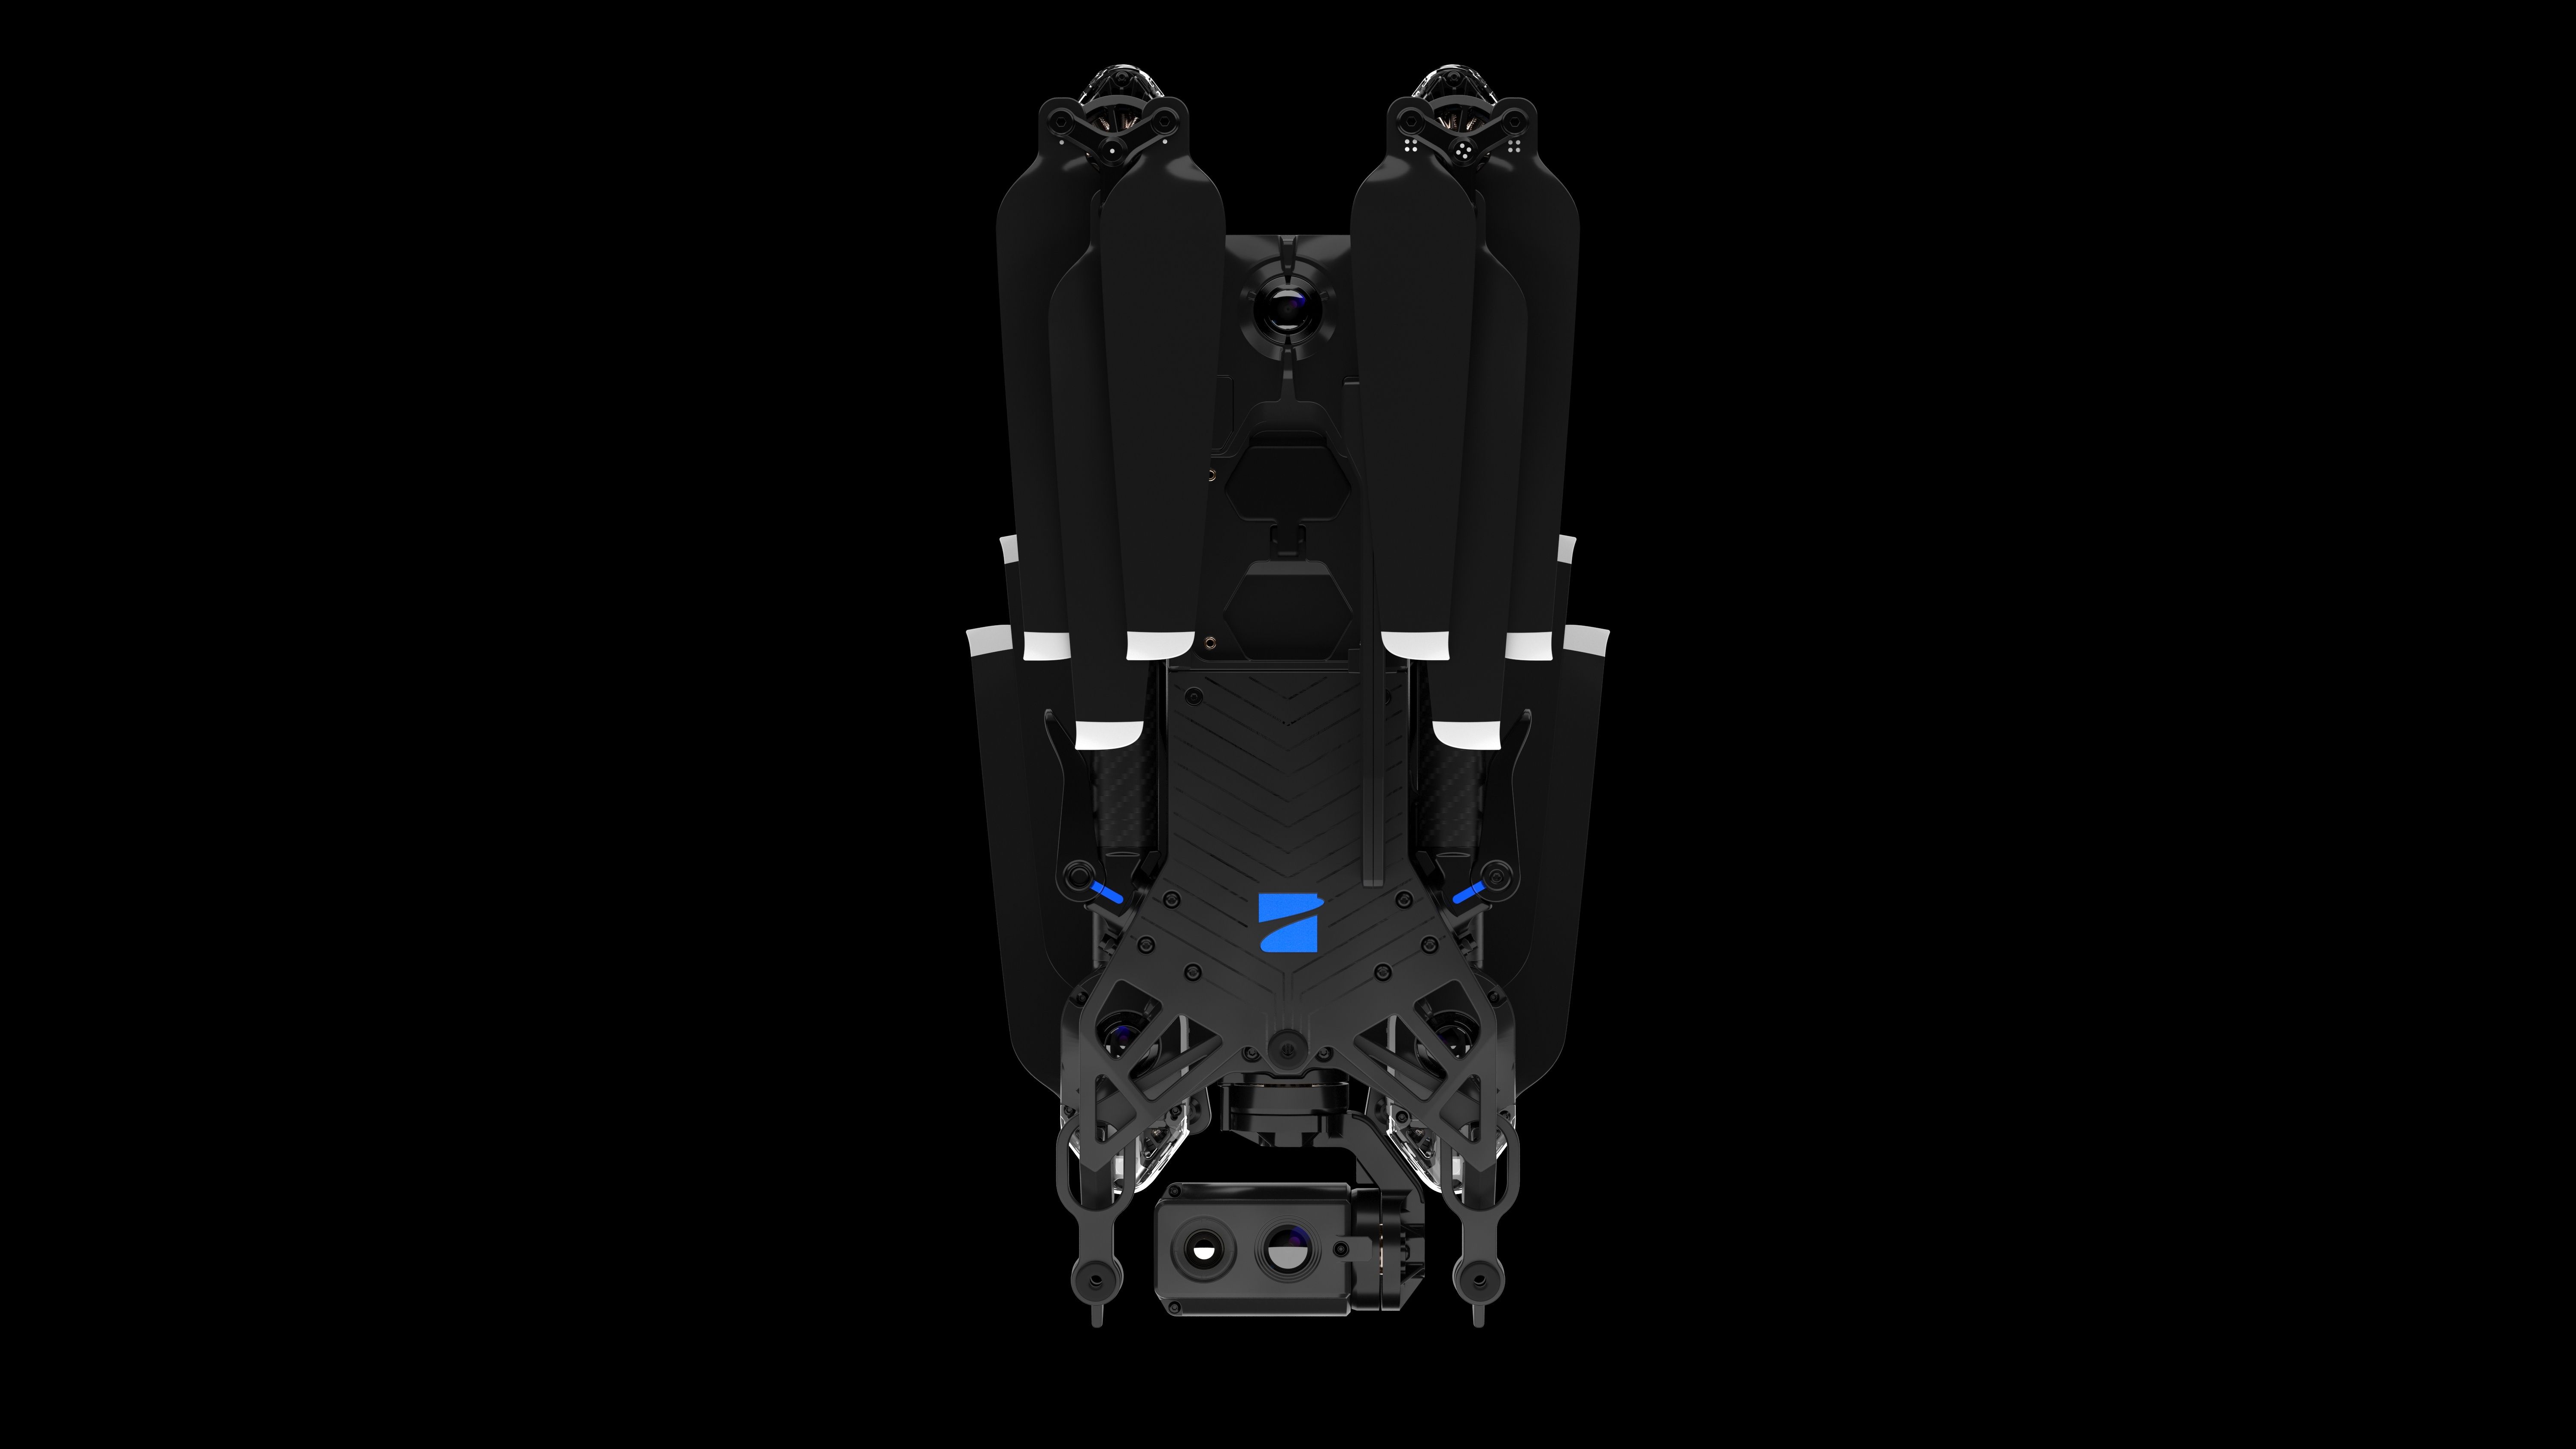 skydio x2 drone